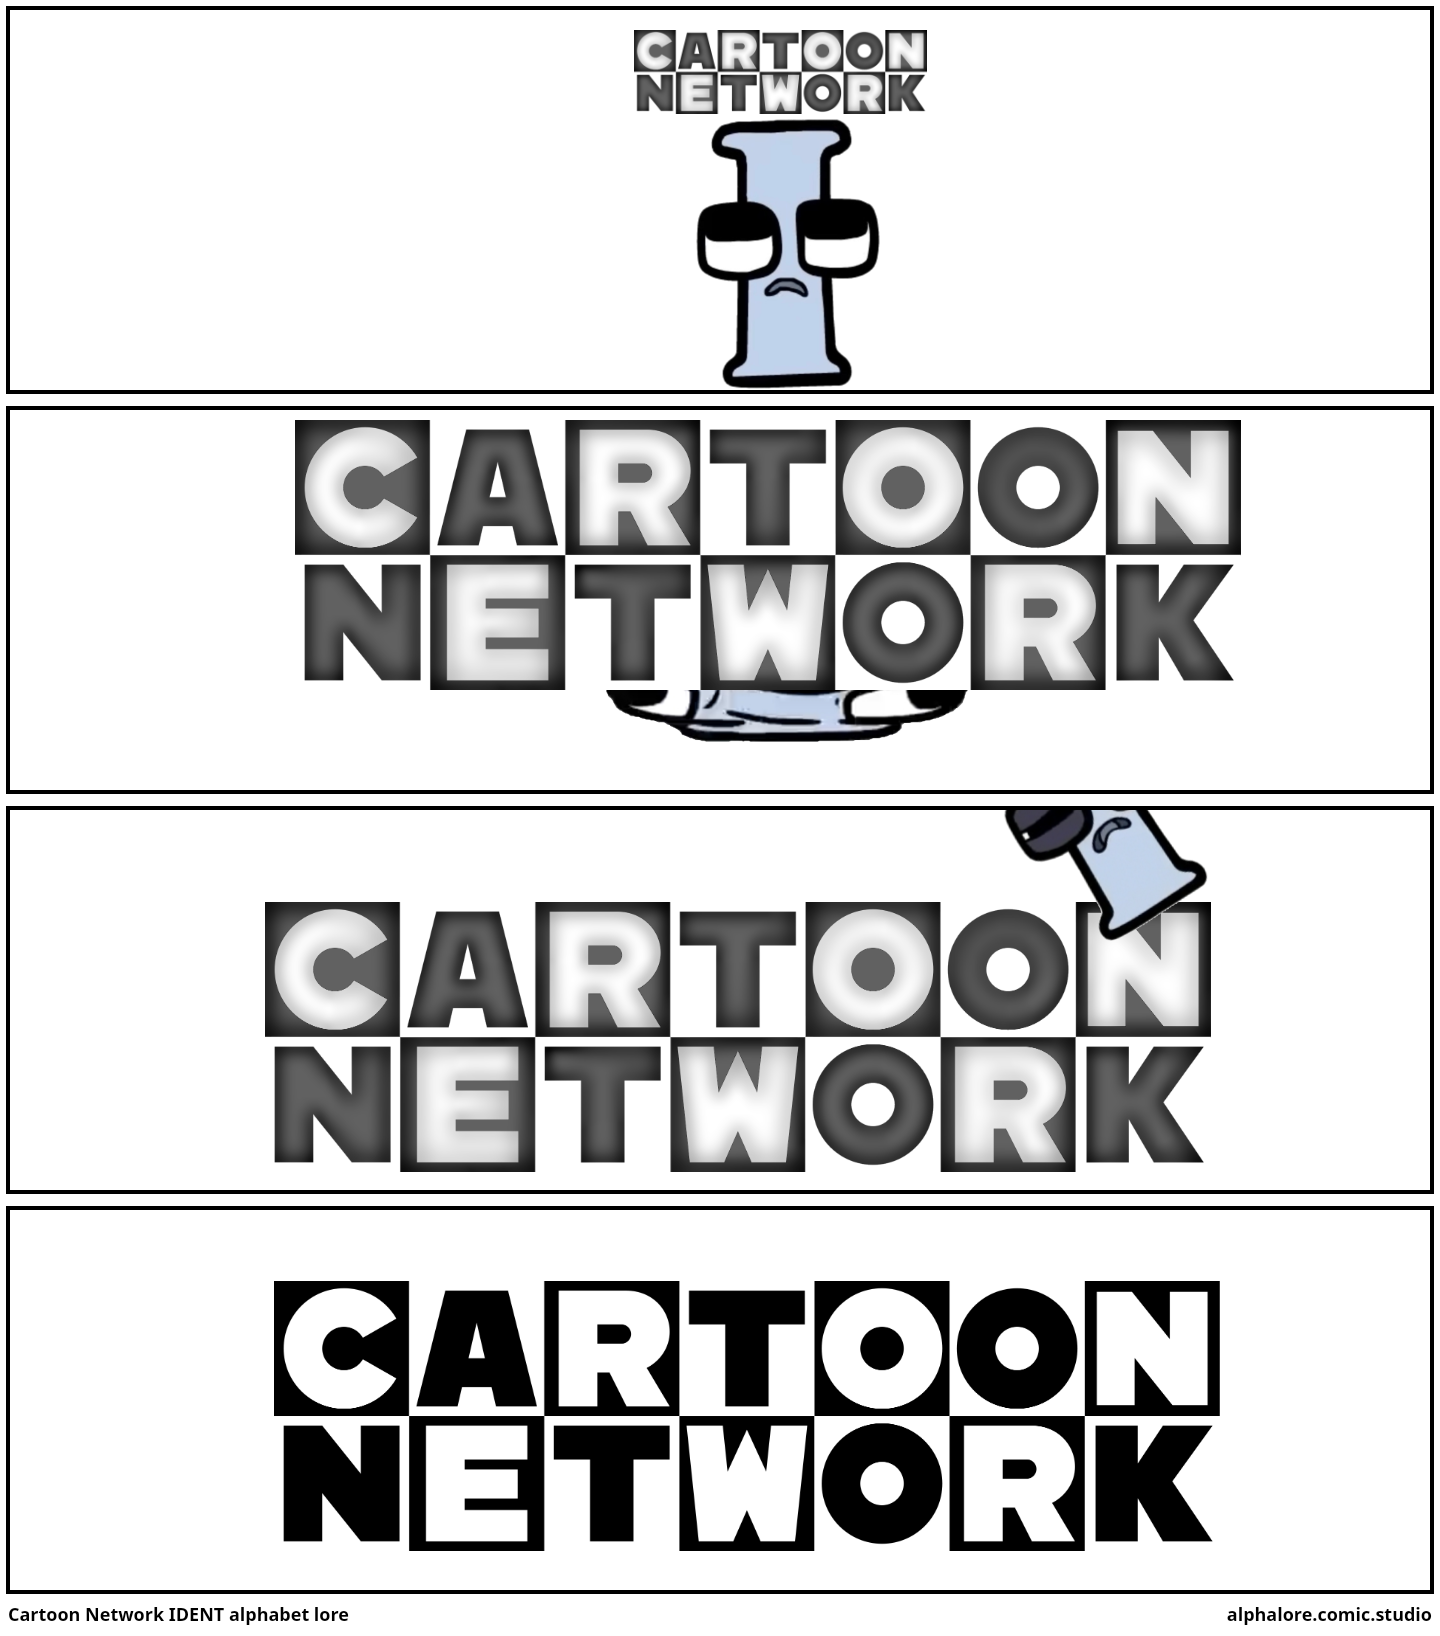 Cartoon Network IDENT alphabet lore